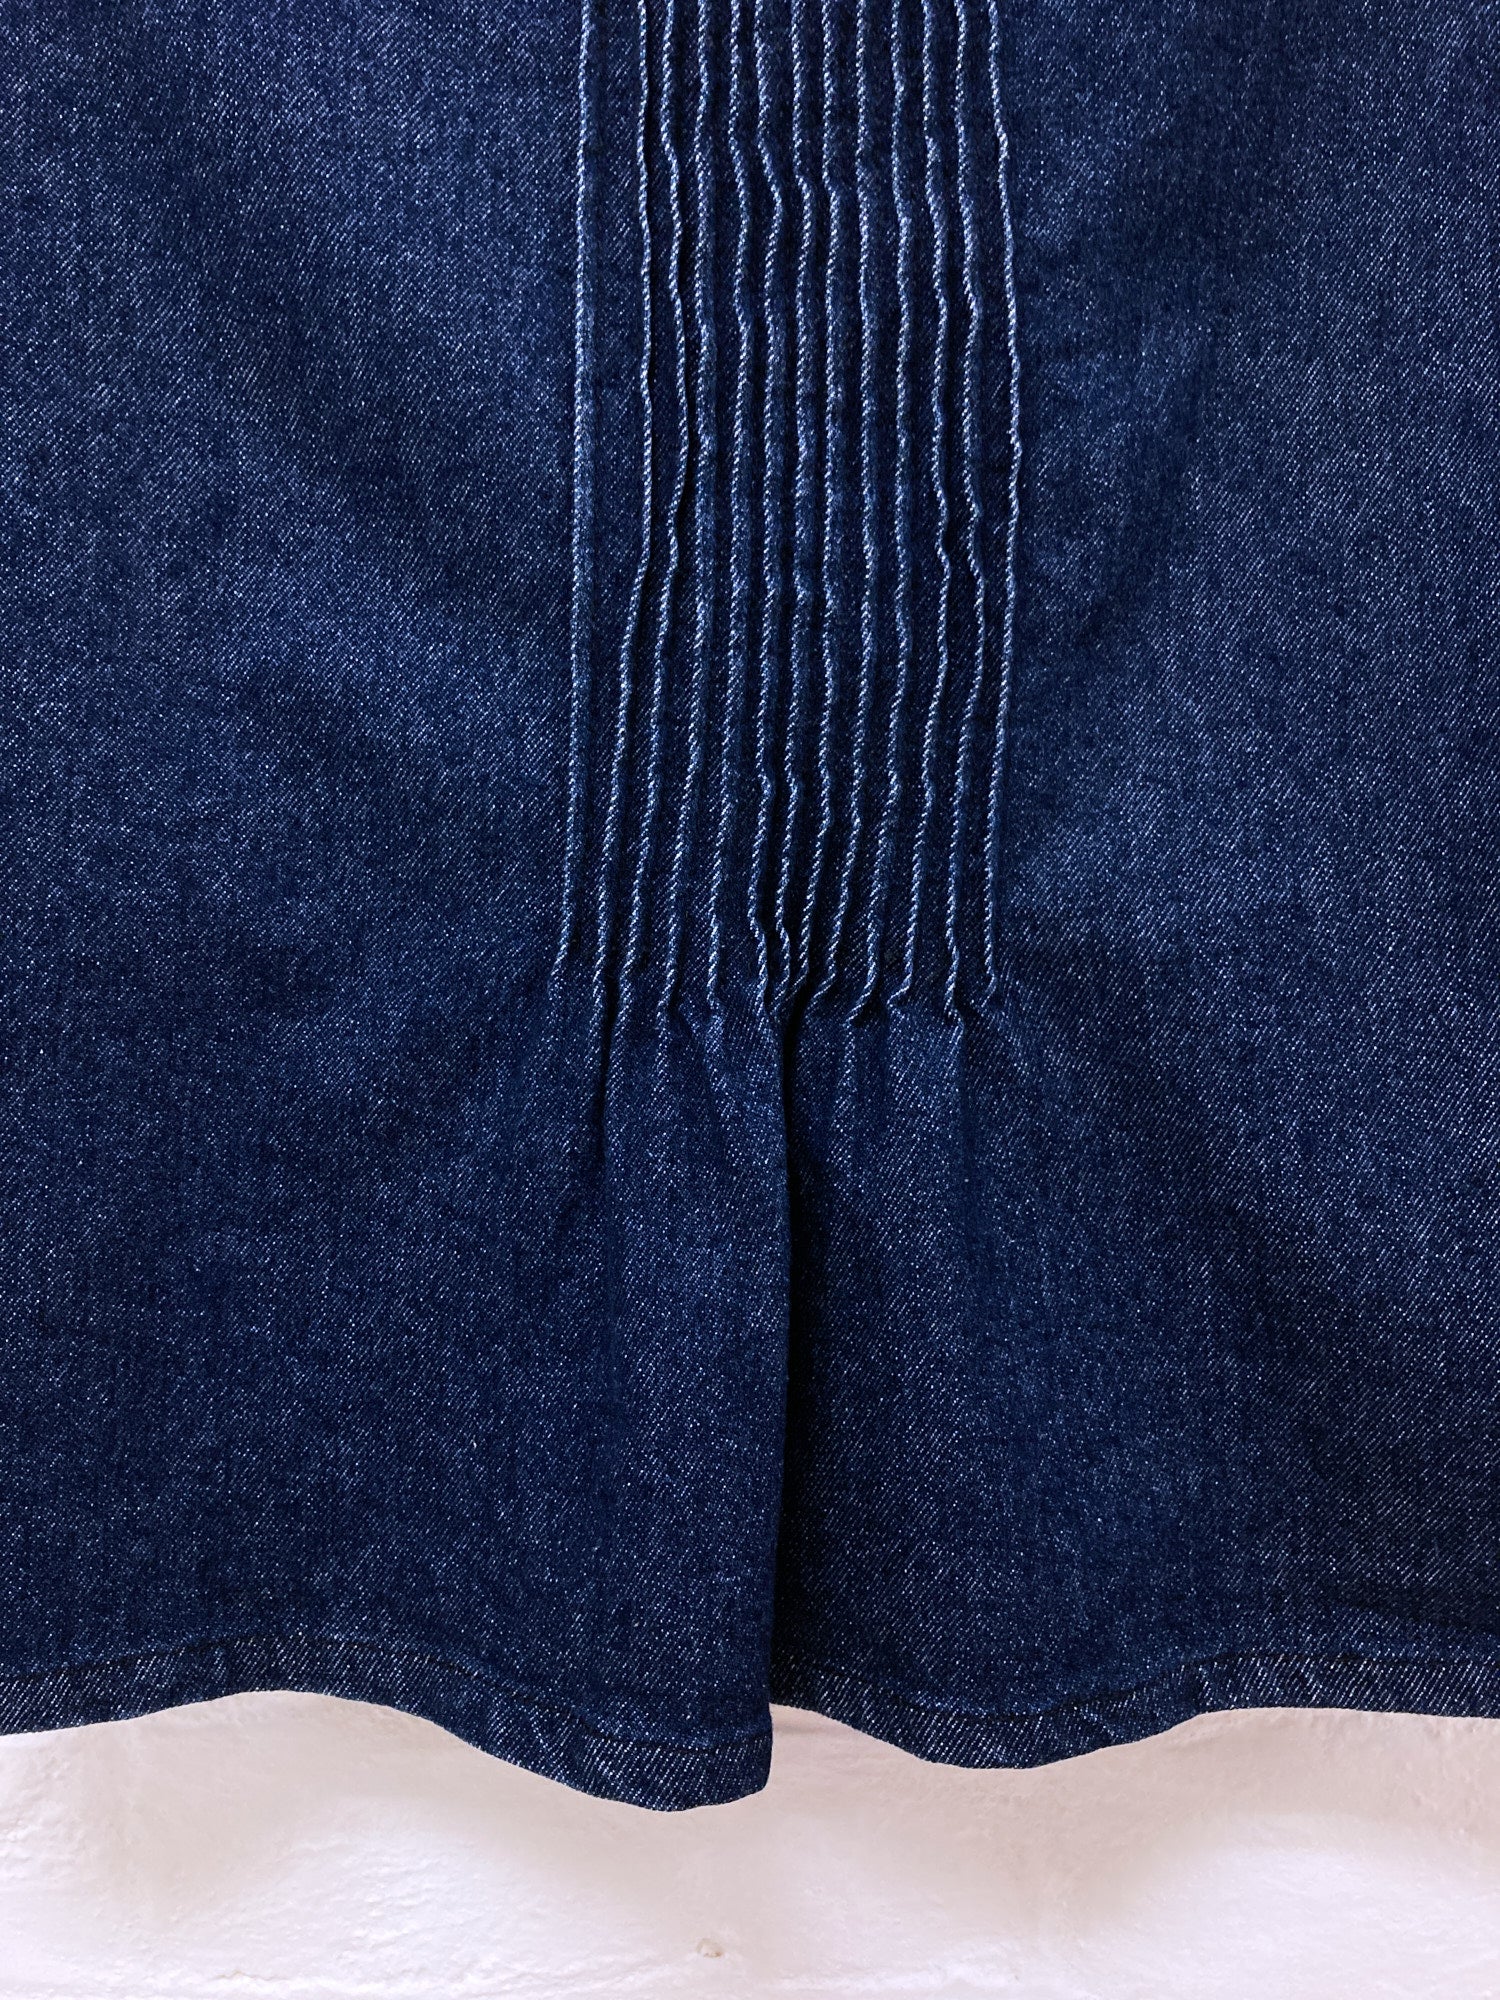 Jean Colonna indigo stretch denim knee length skirt with back tuck detail - size 40